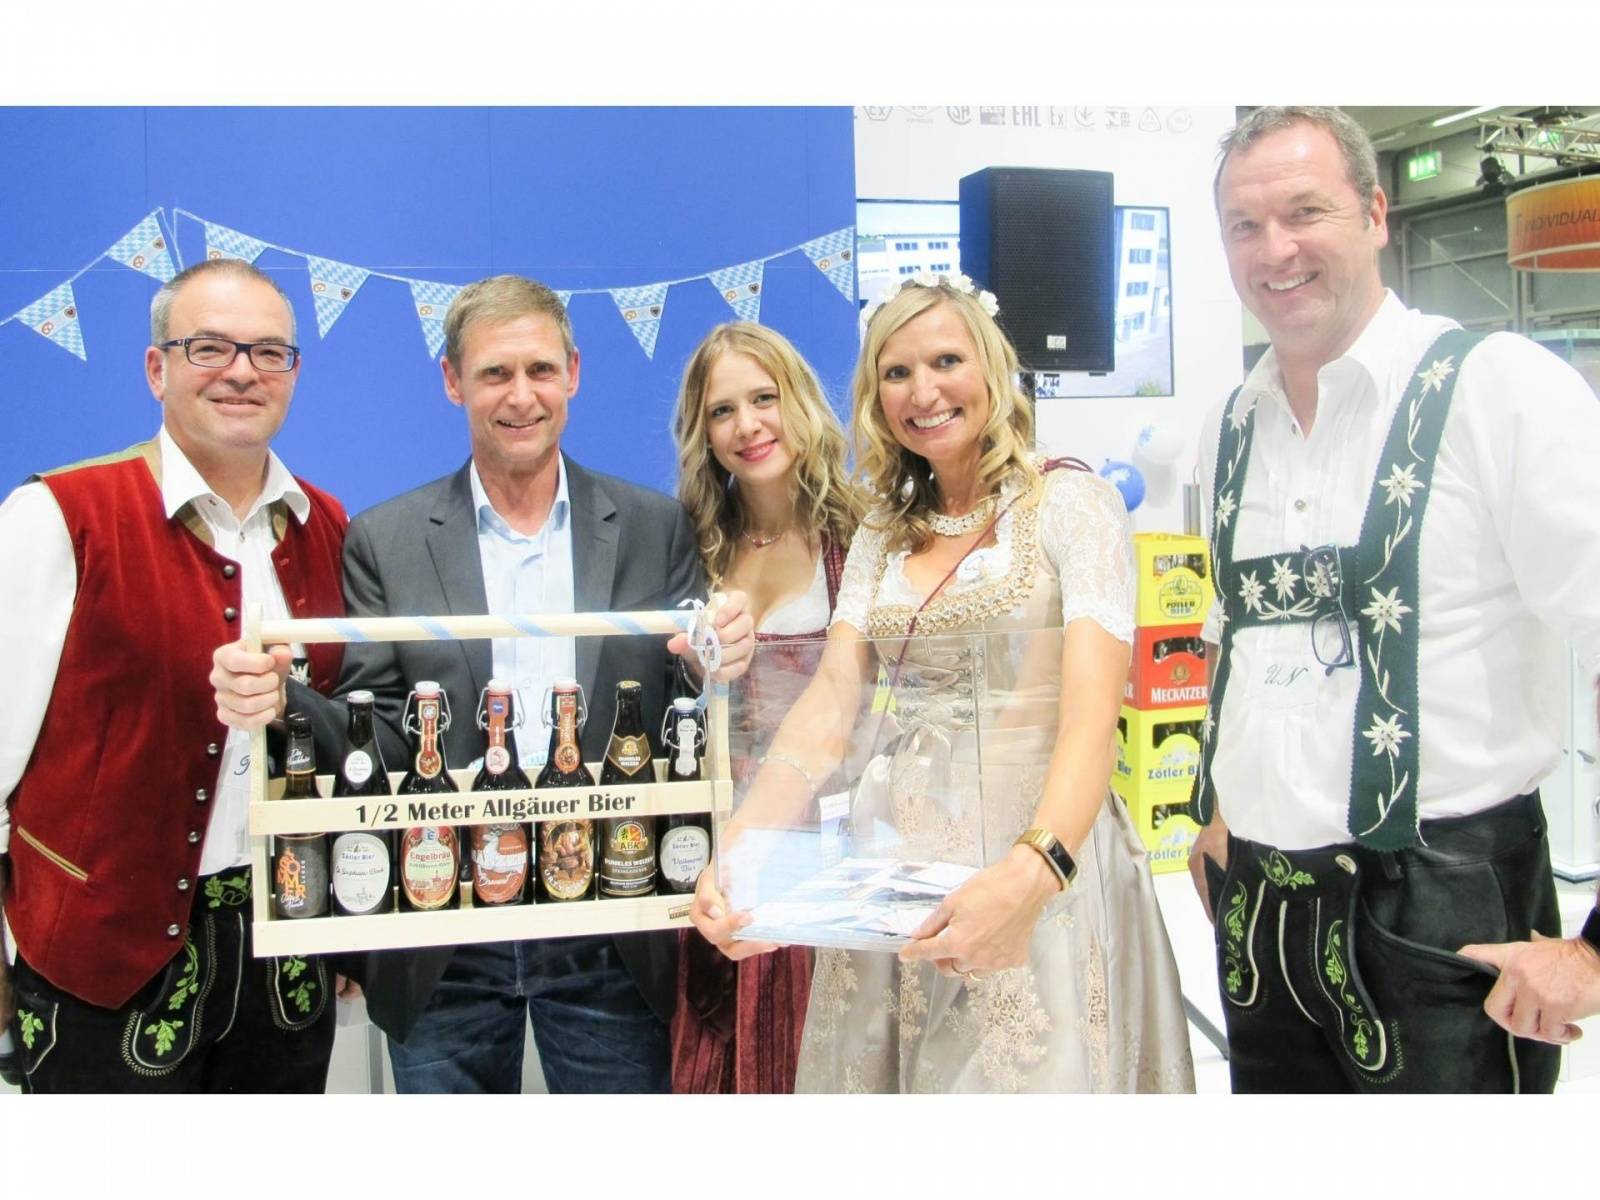 Thomas Schäfer, Andrea Strobl, Andrea Fisher and Uwe Niekrawietz with a winner